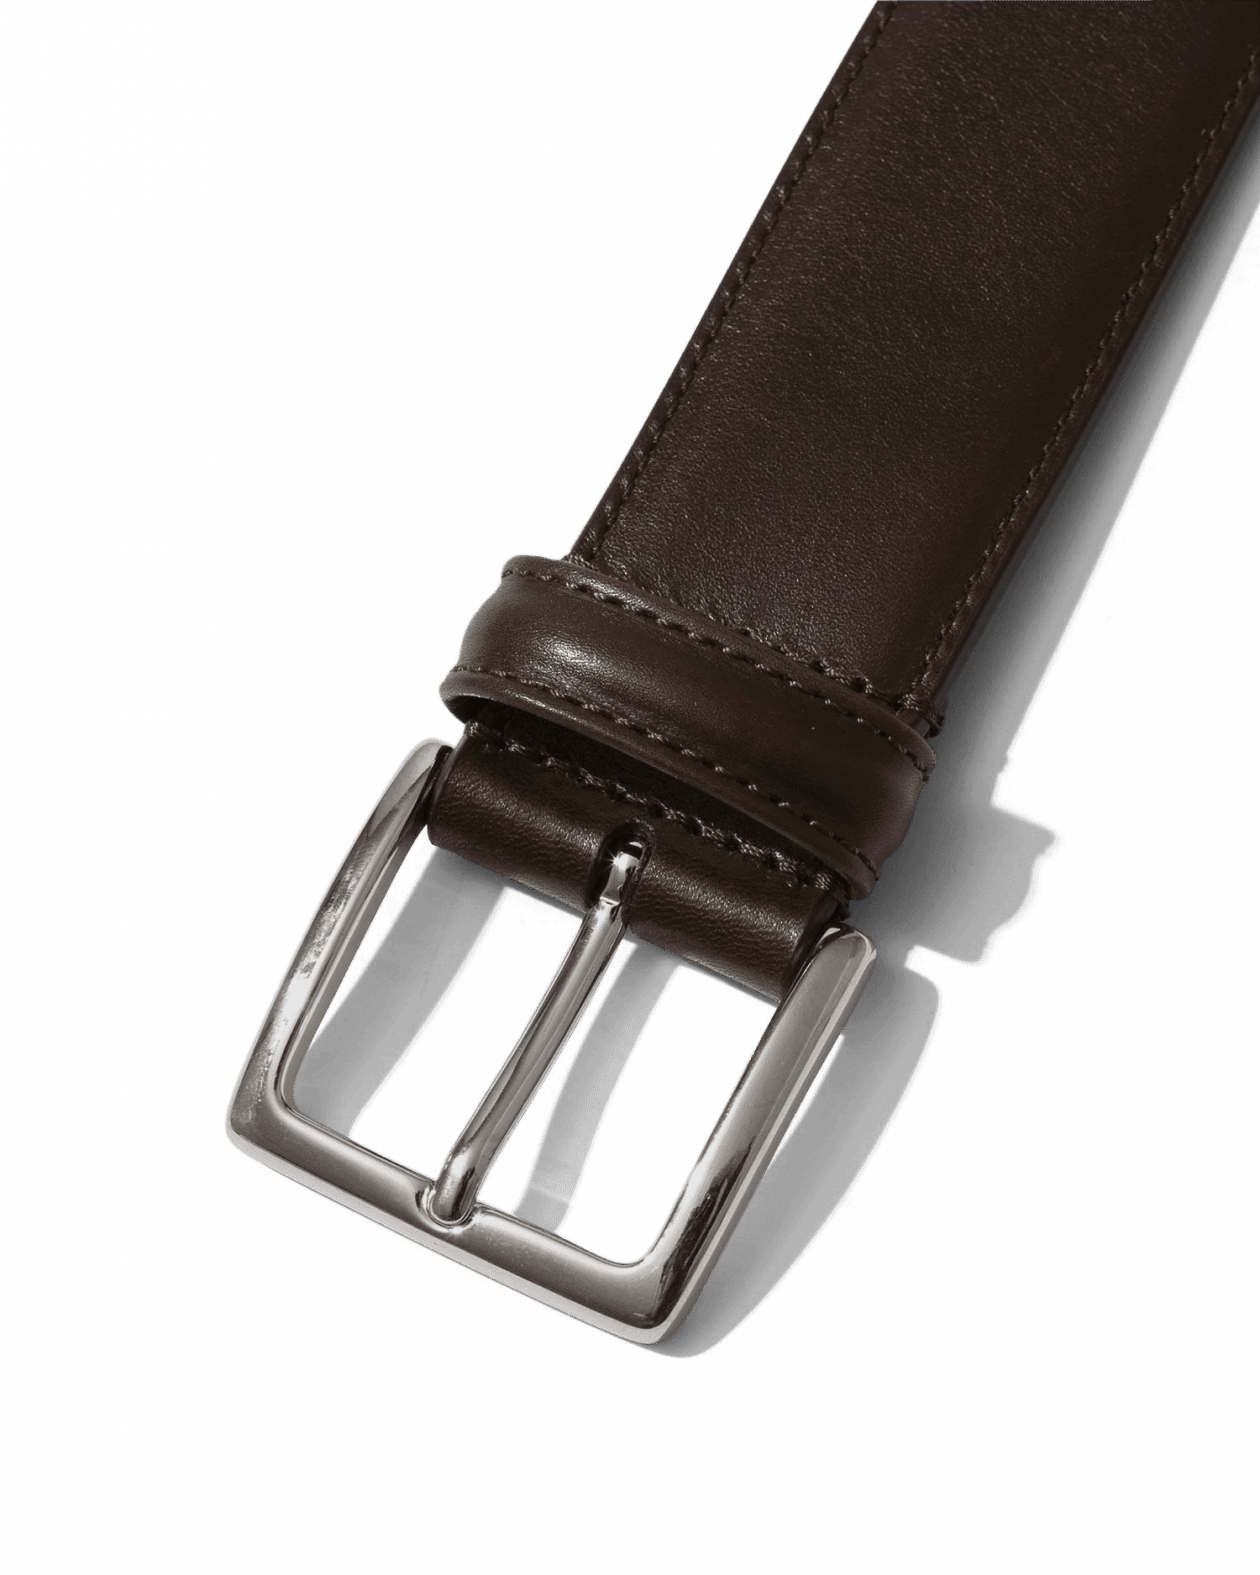 Brown Calf Leather Belt